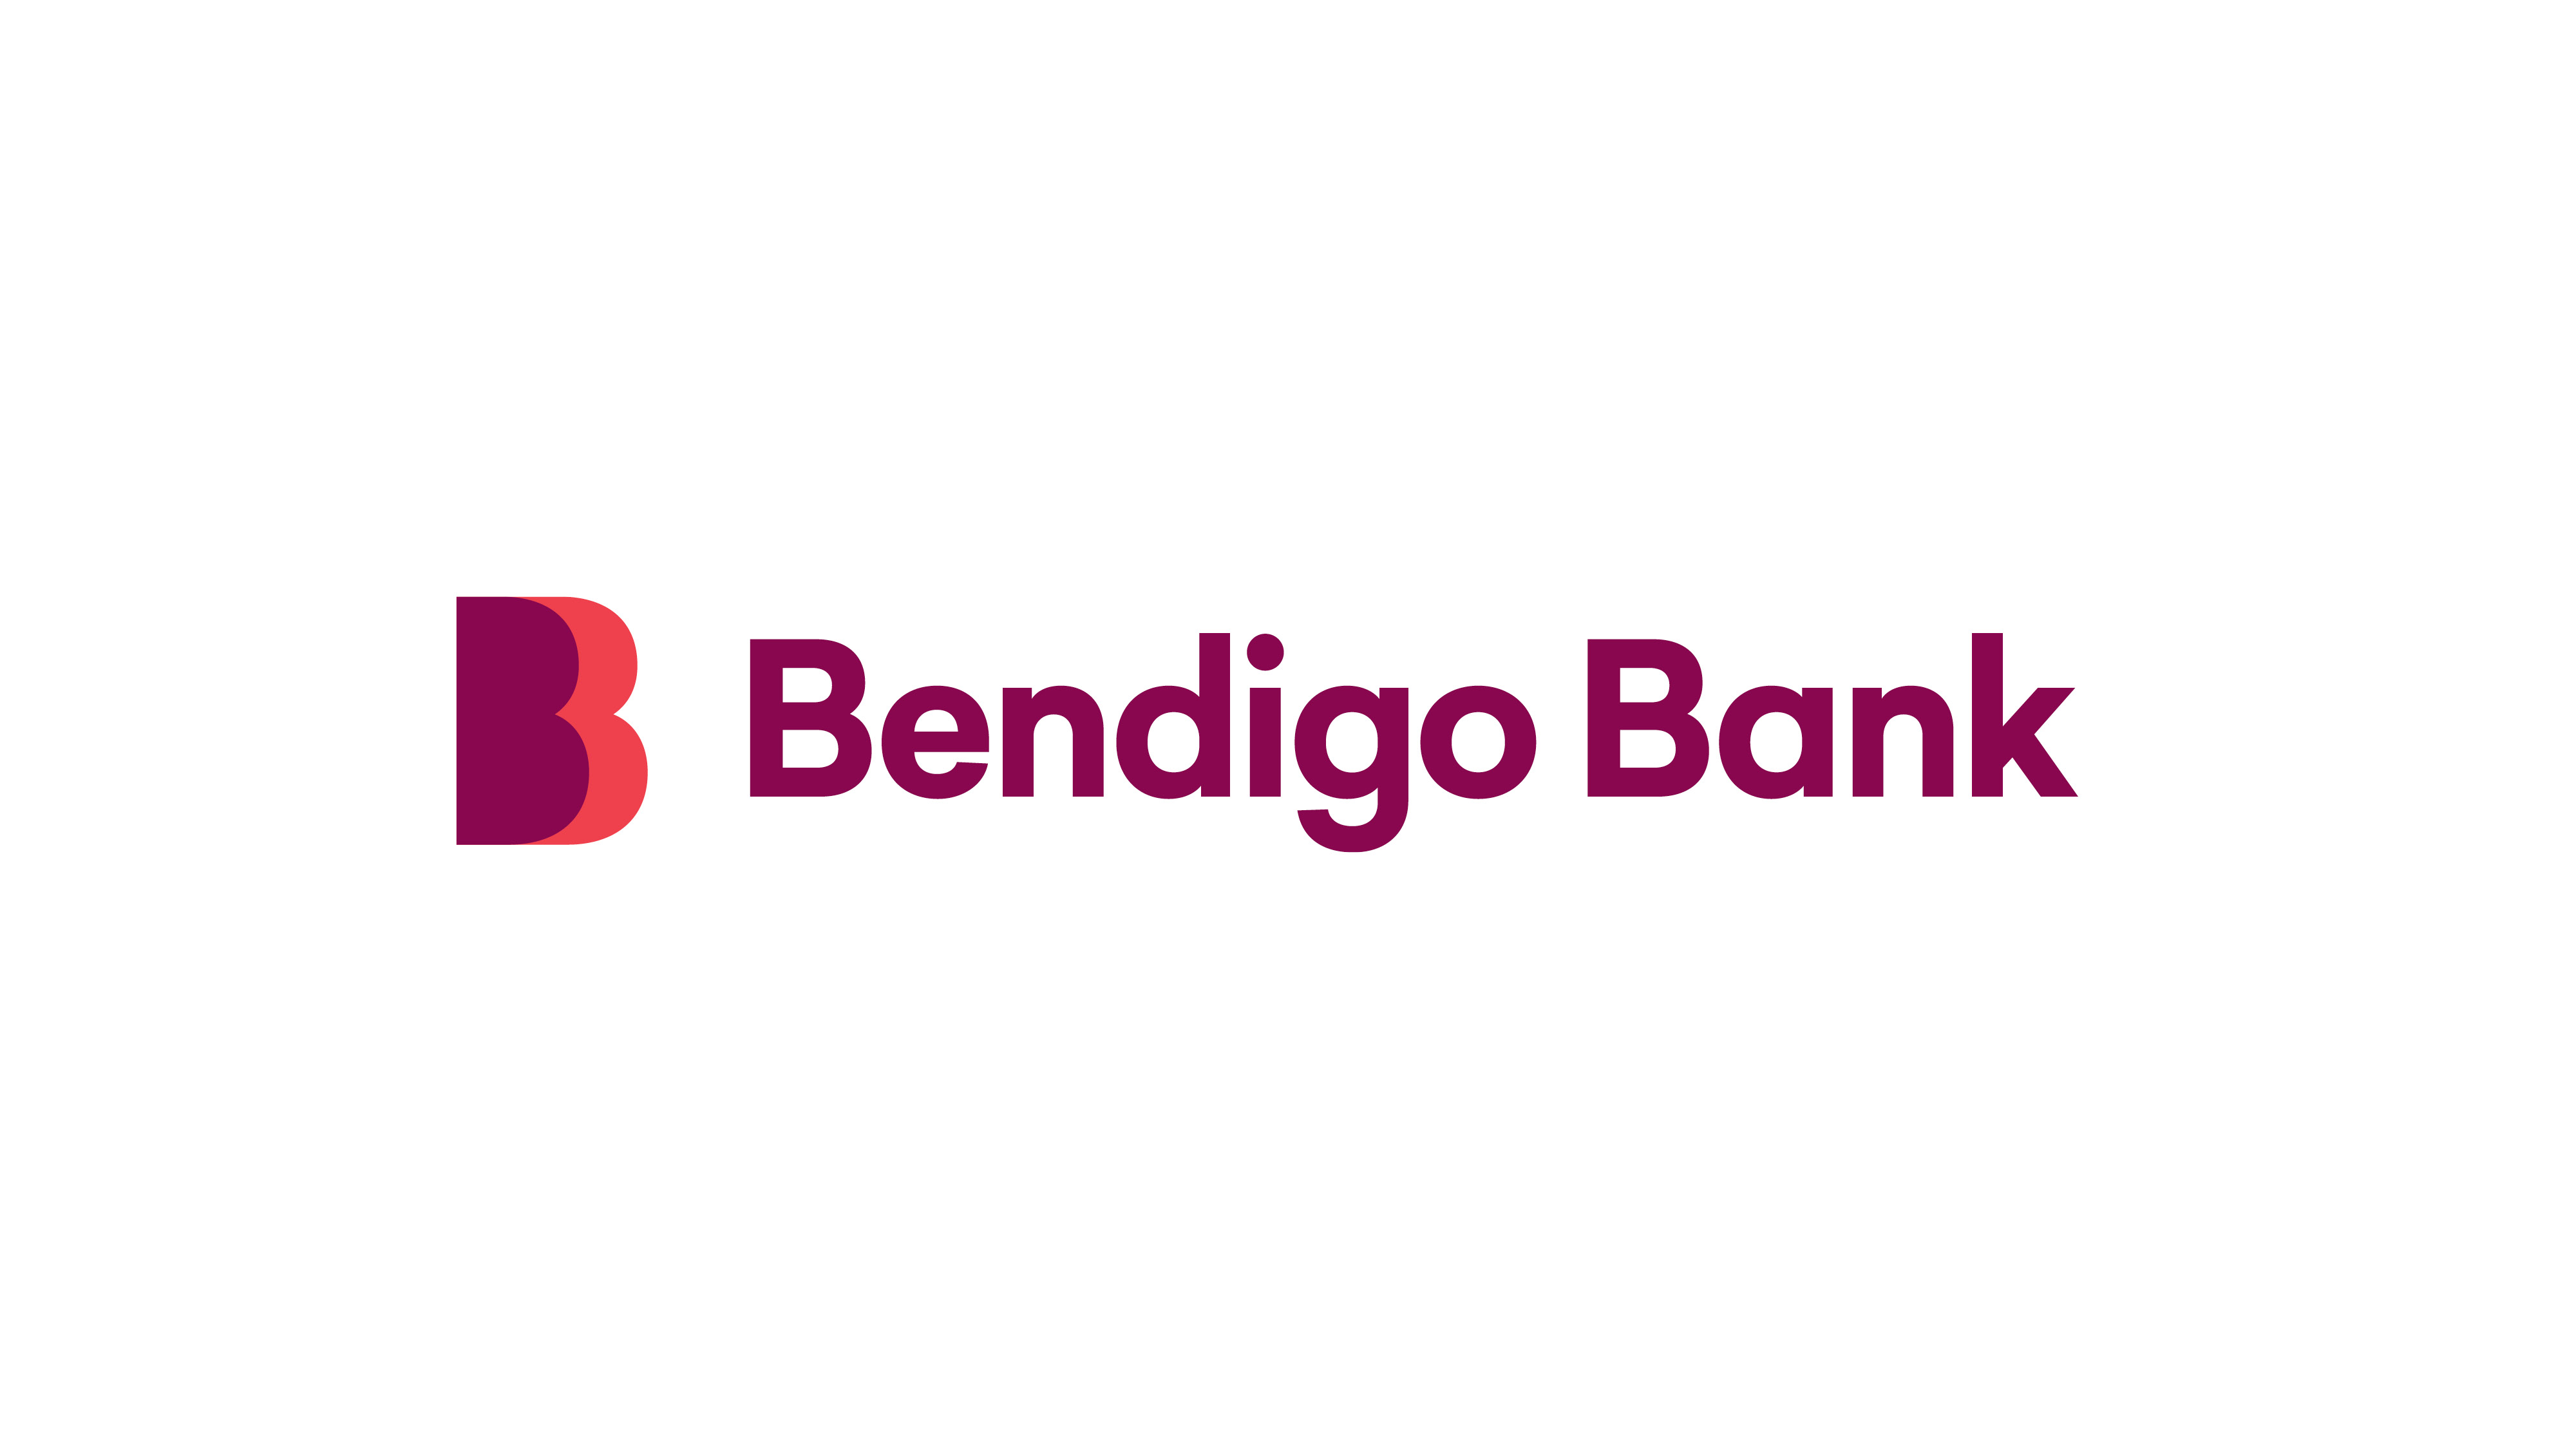 Bendigo Bank reveals refreshed branding, designed to appeal to a